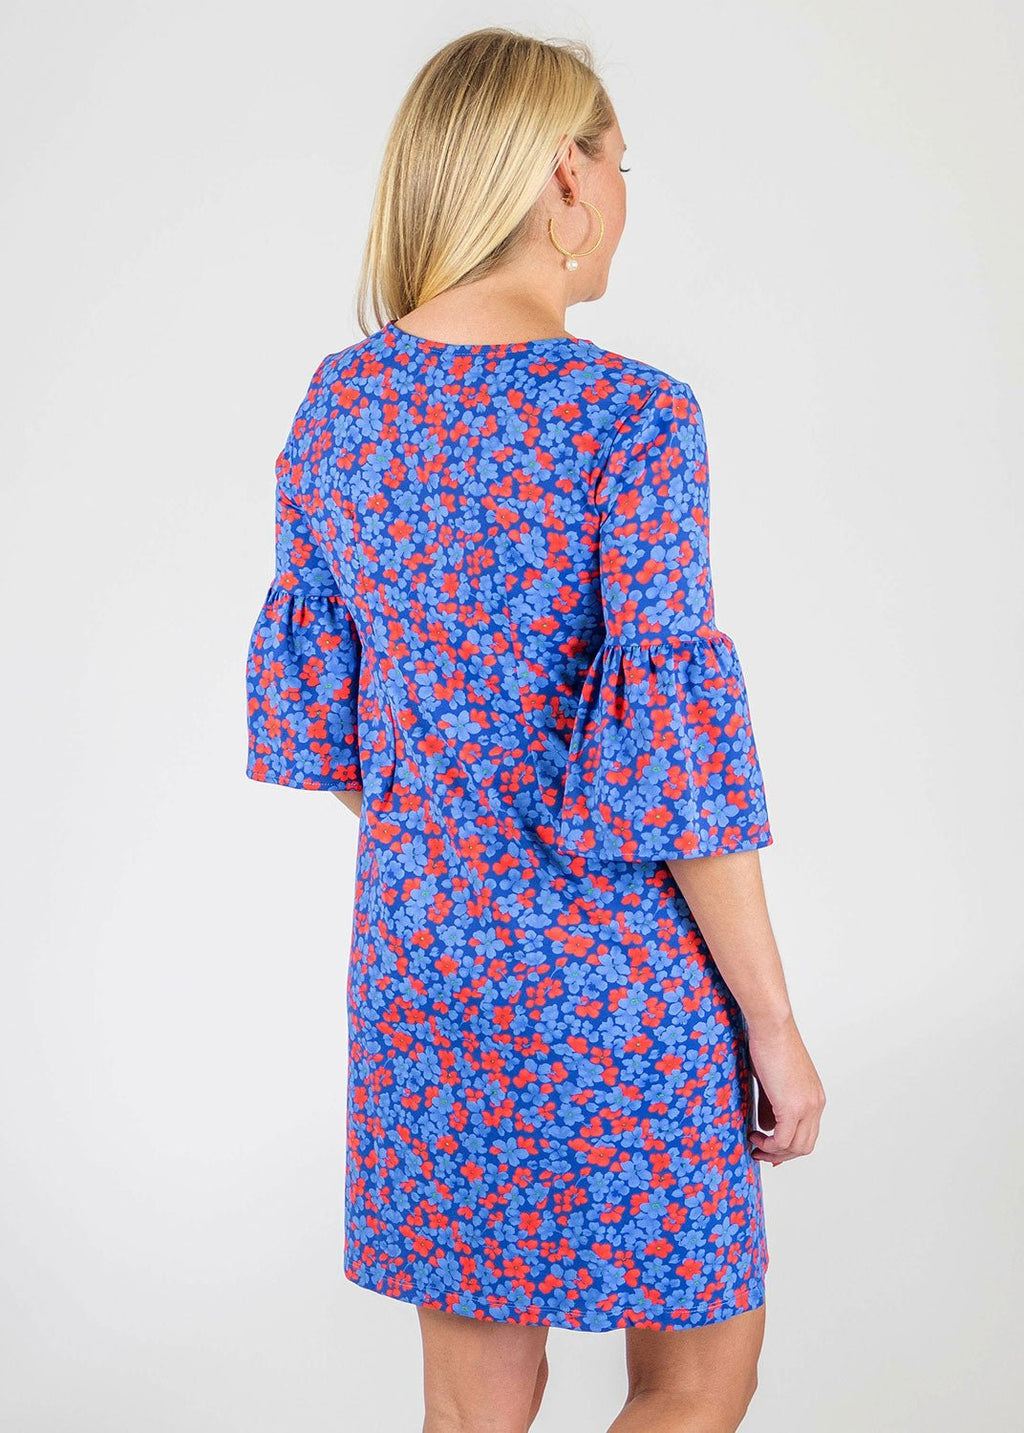 Blue & Red Berkley 3/4 Sleeve Dress in a Floral Print